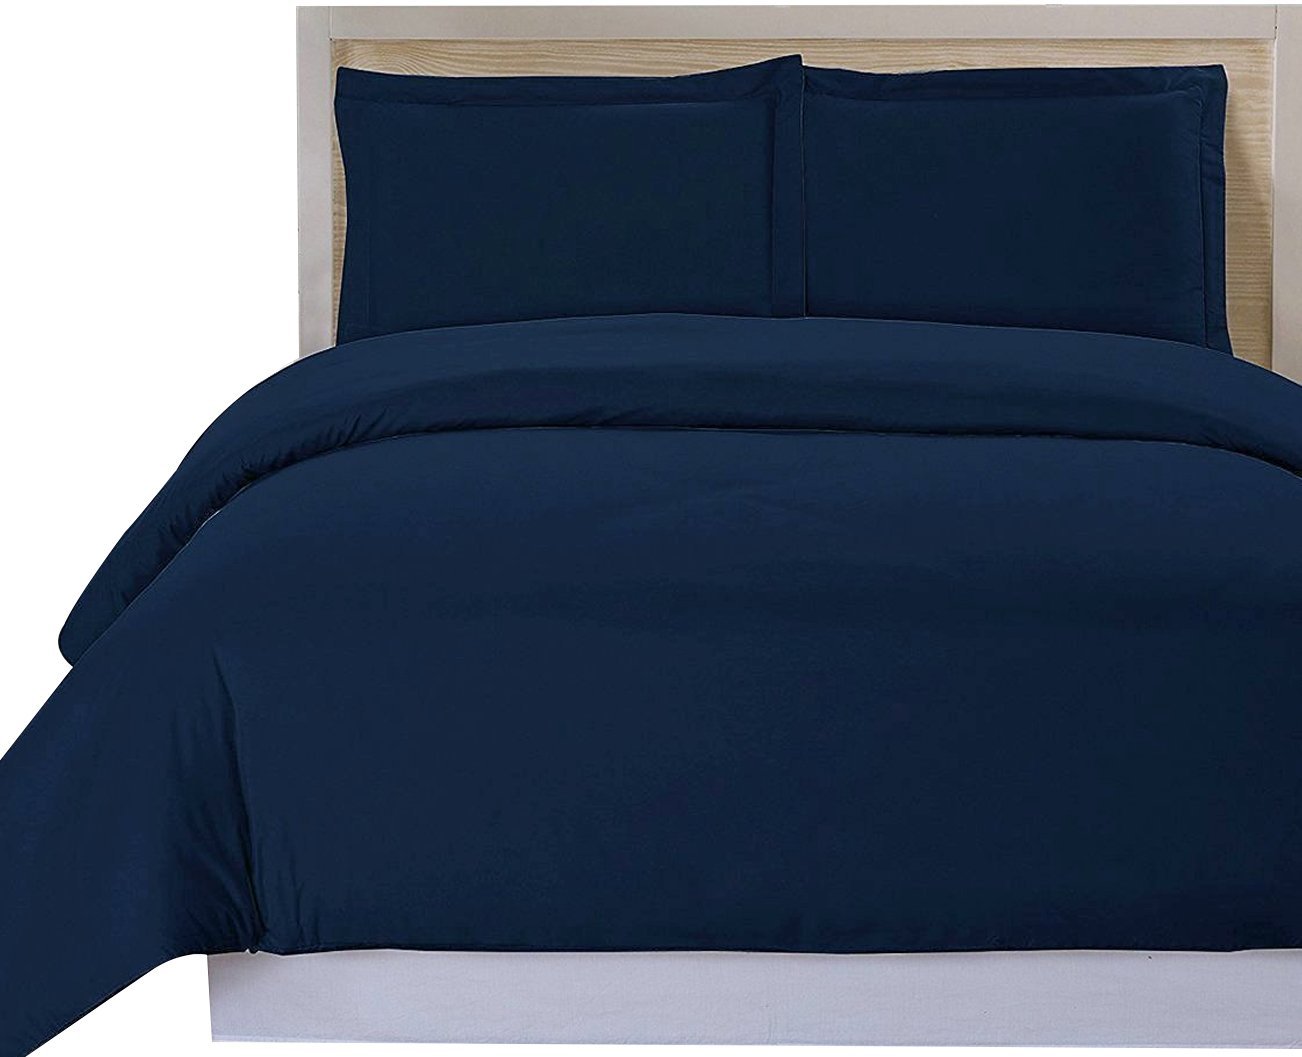 Utopia Bedding 3 Piece King Duvet Cover Set with 2 Pillow Shams, Navy